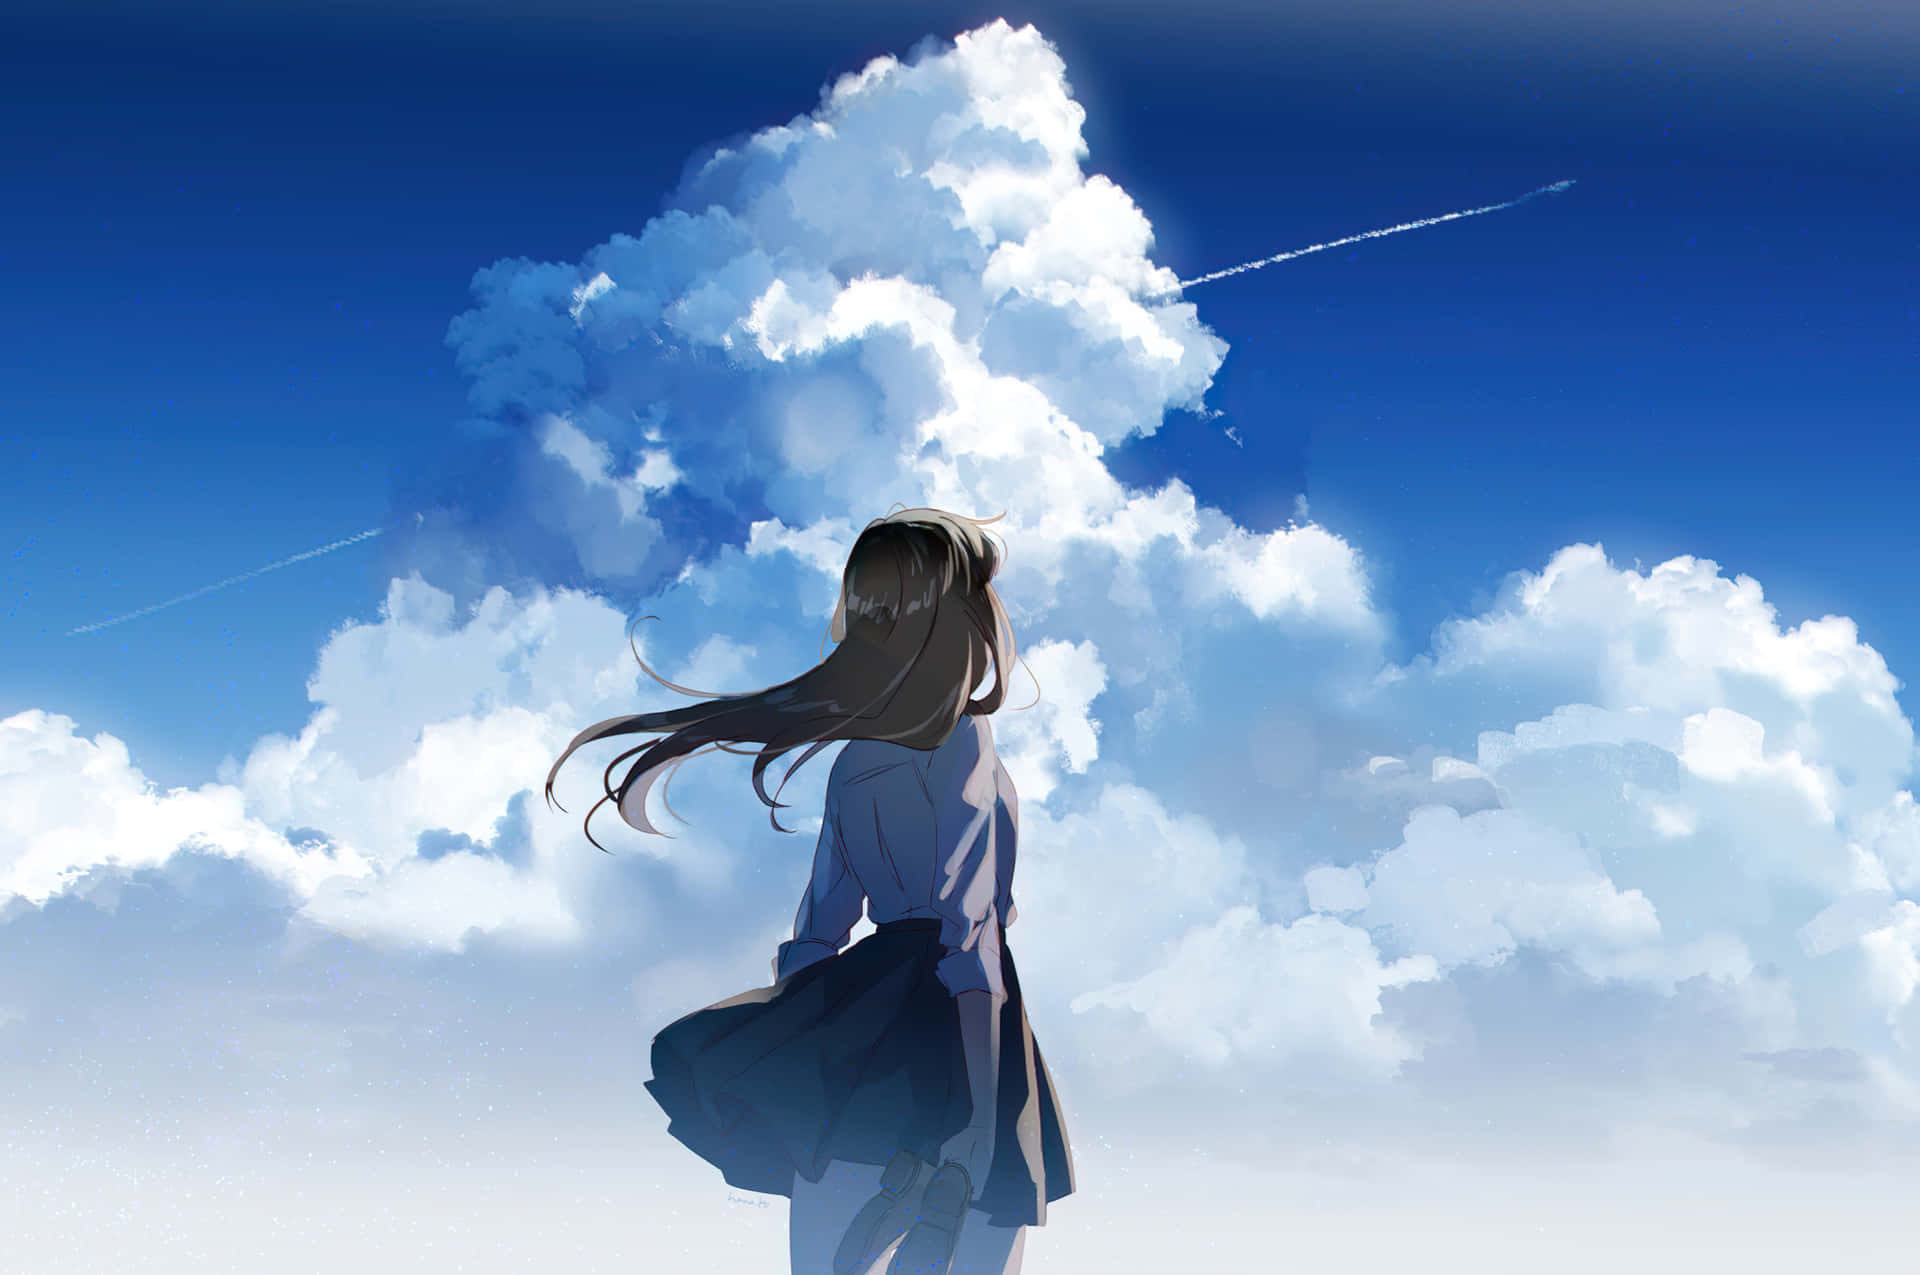 Enjoy this beautiful anime sky and dream away